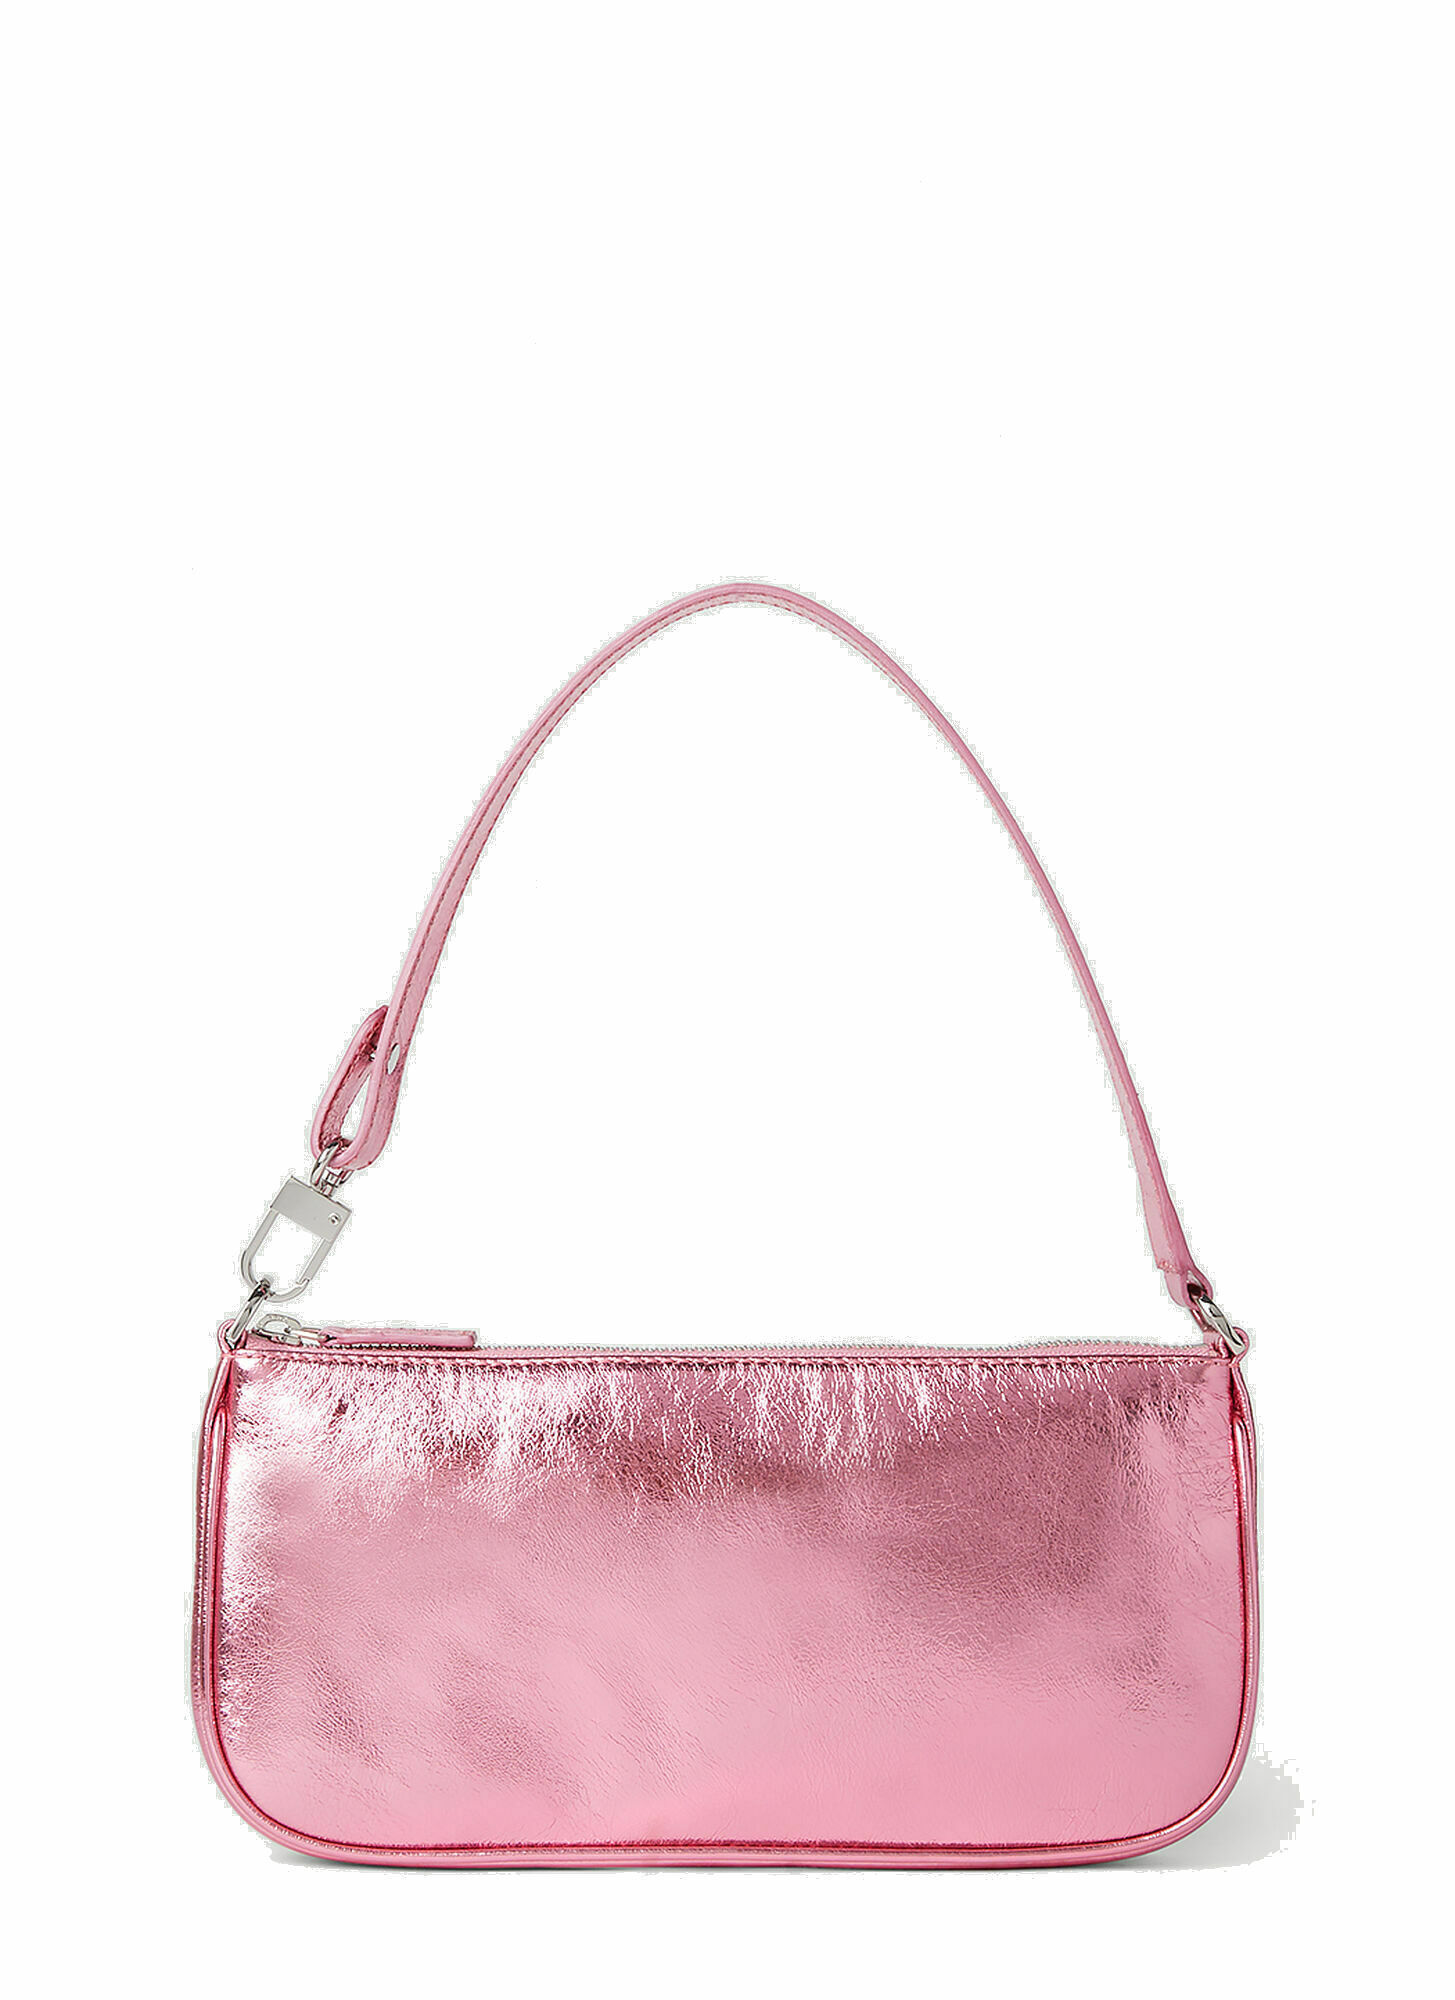 BY FAR - Rachel Shoulder Bag in Pink By Far